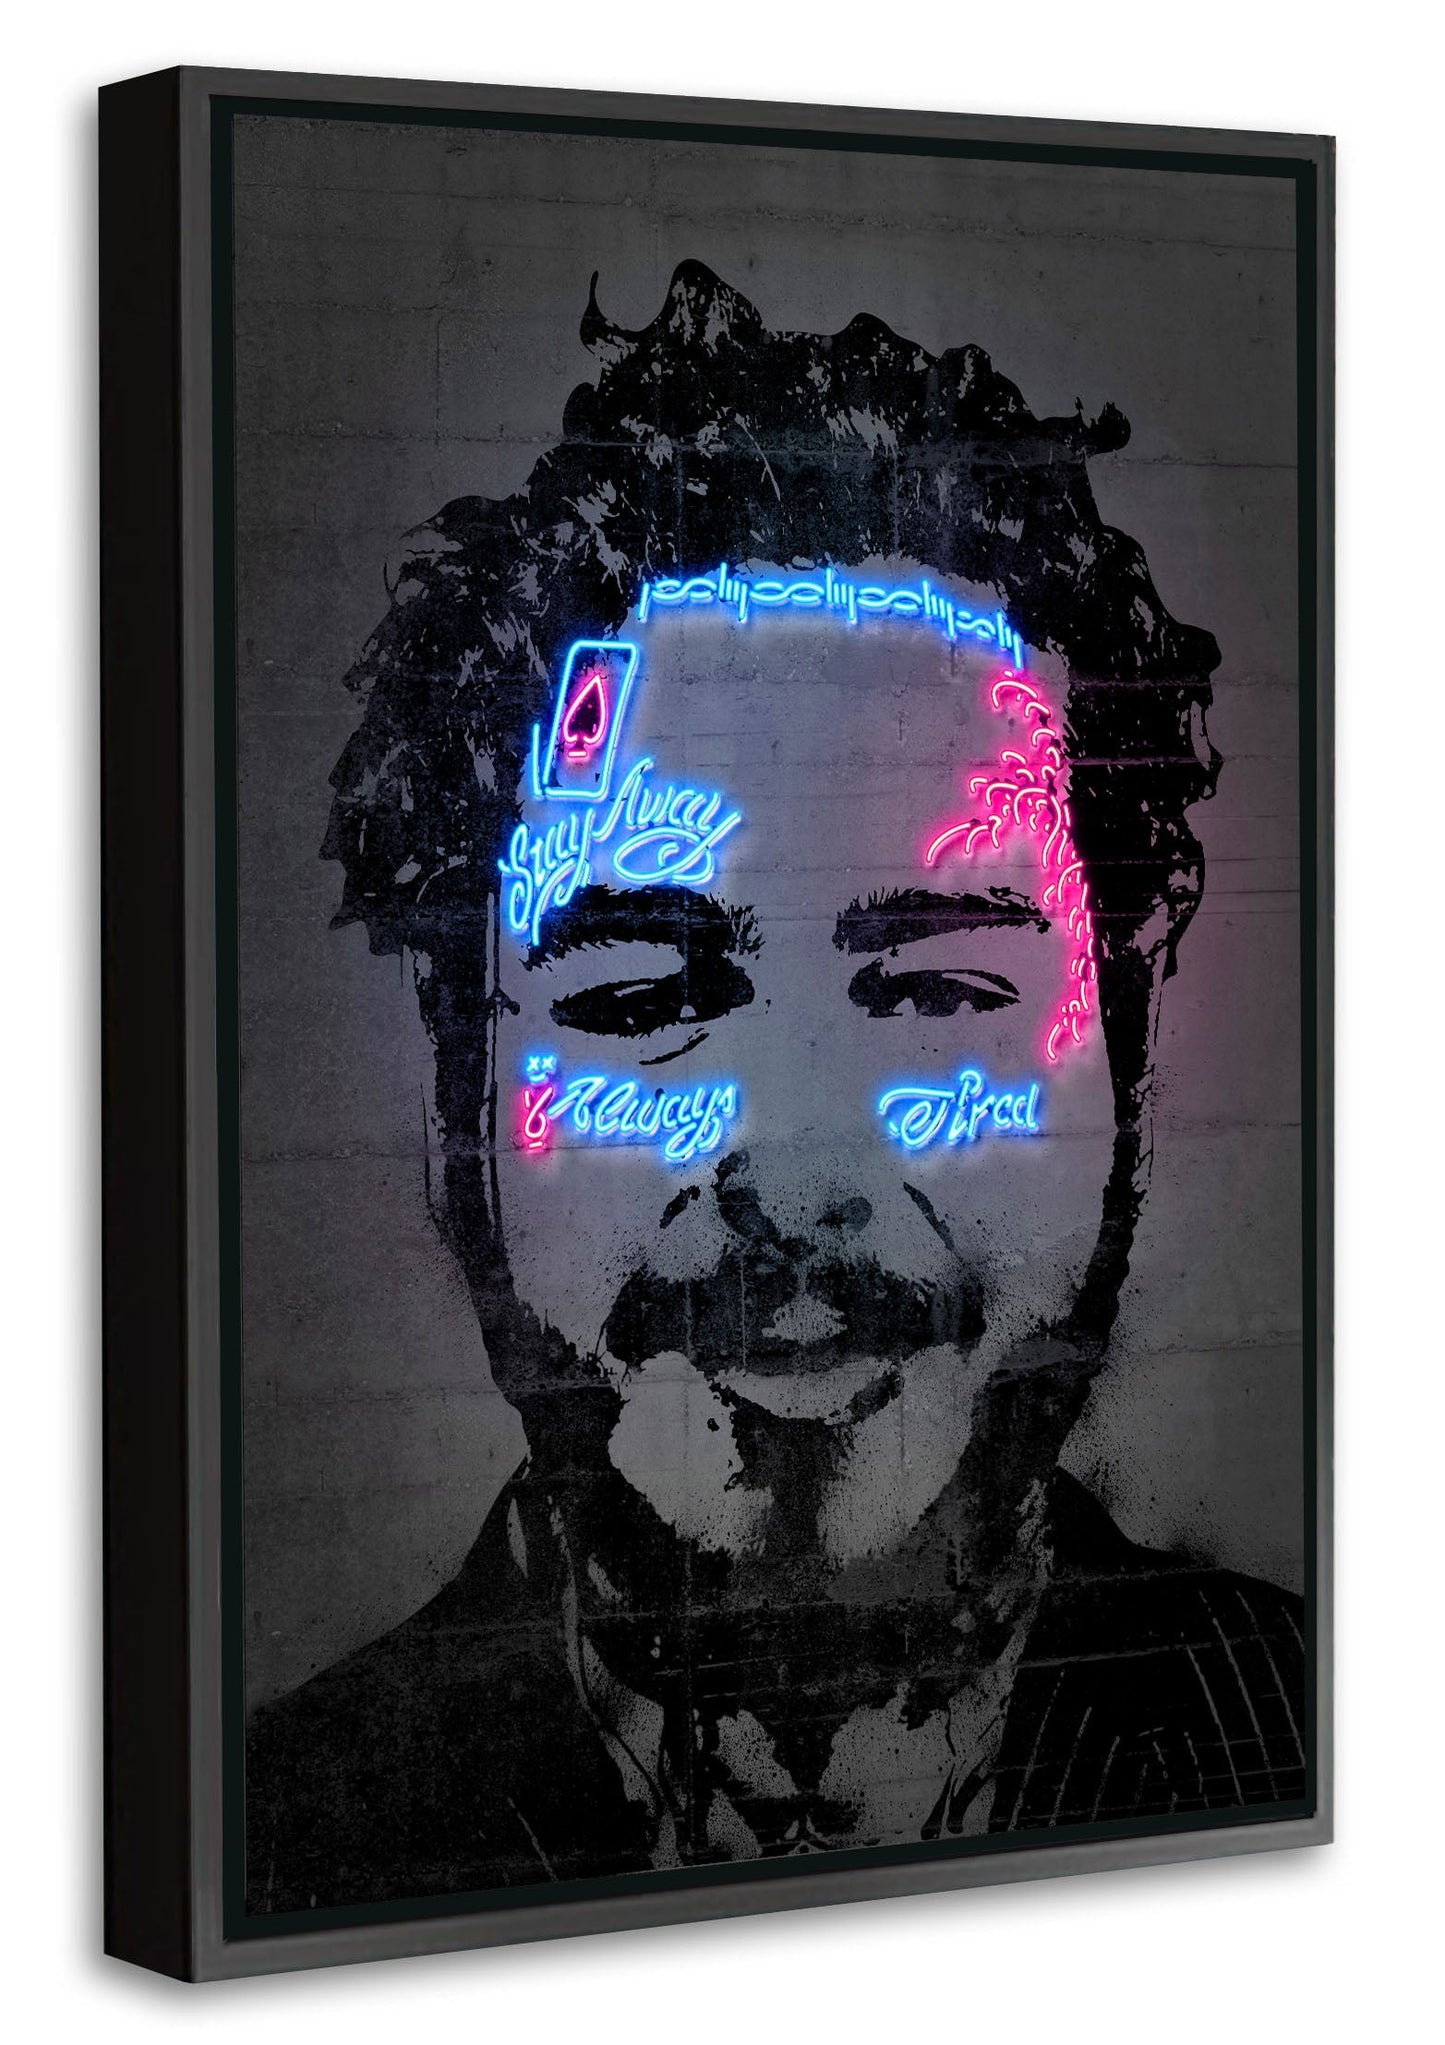 Malone-neon-art, print-Canvas Print with Box Frame-40 x 60 cm-BLUE SHAKER